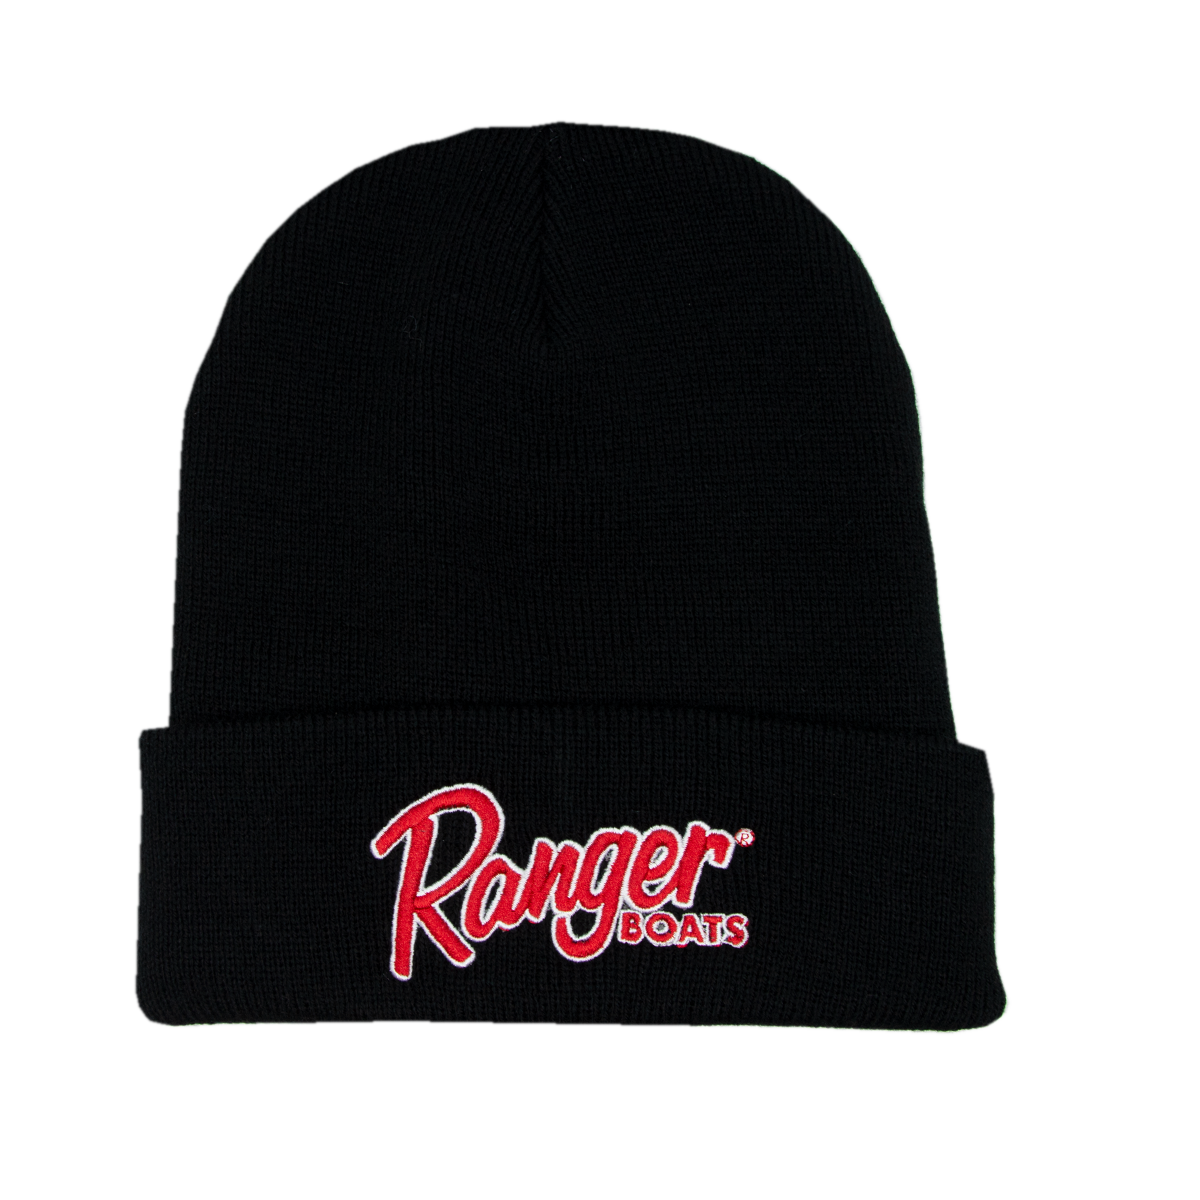 Accessories & Hats - RangerBoatsGear